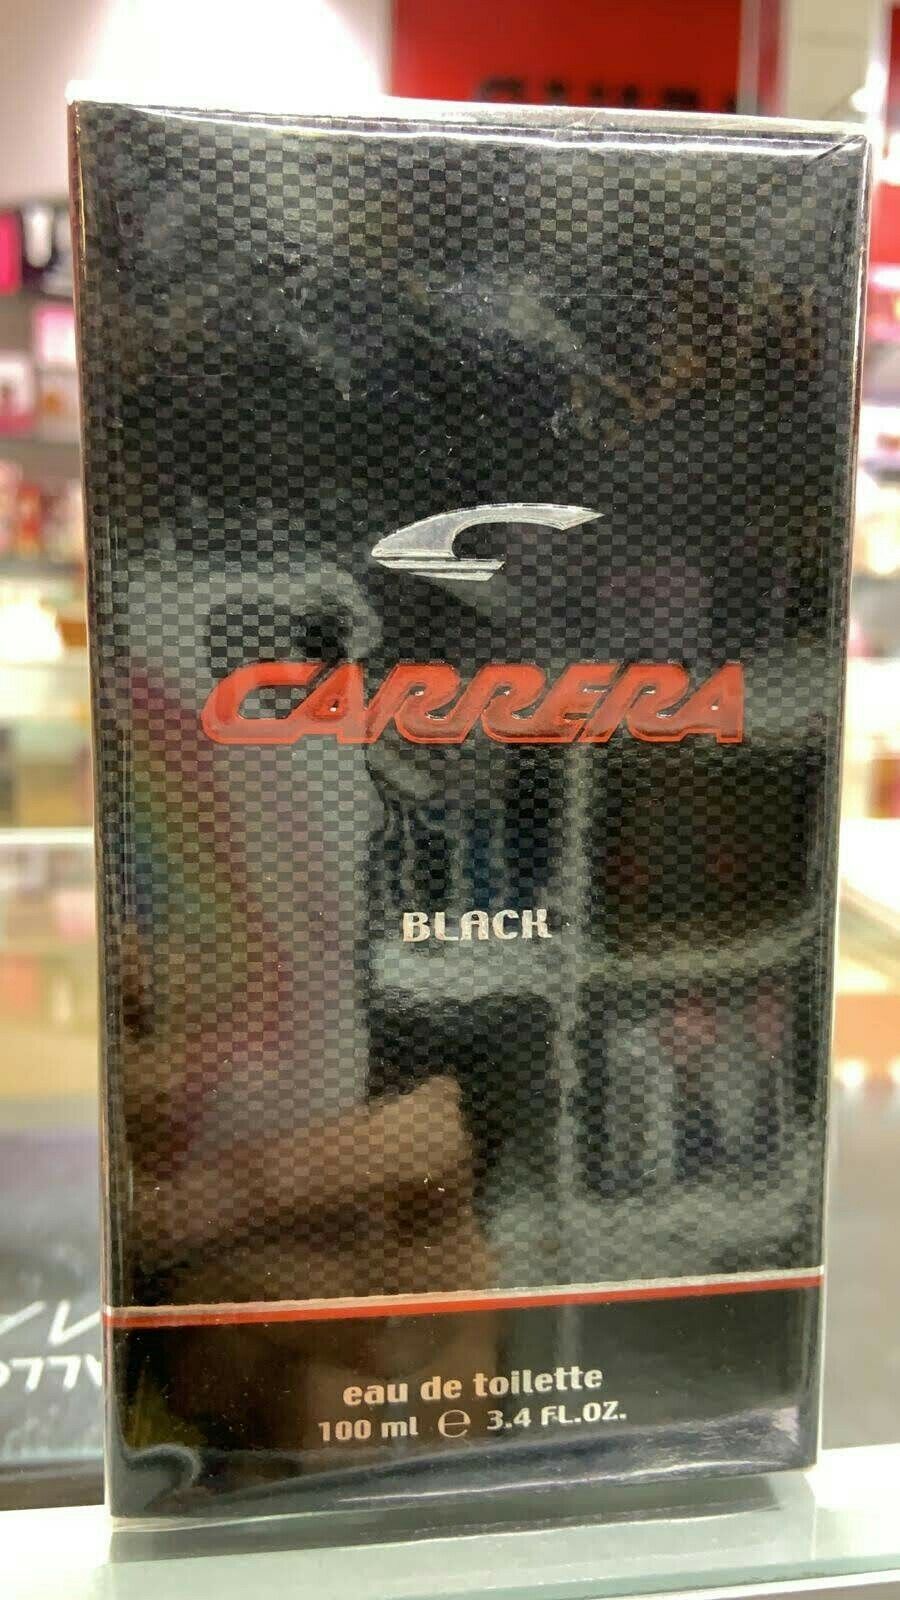 Carrera Black by Carrera for Men EDT Cologne Spray   in Box  827669008815 | eBay